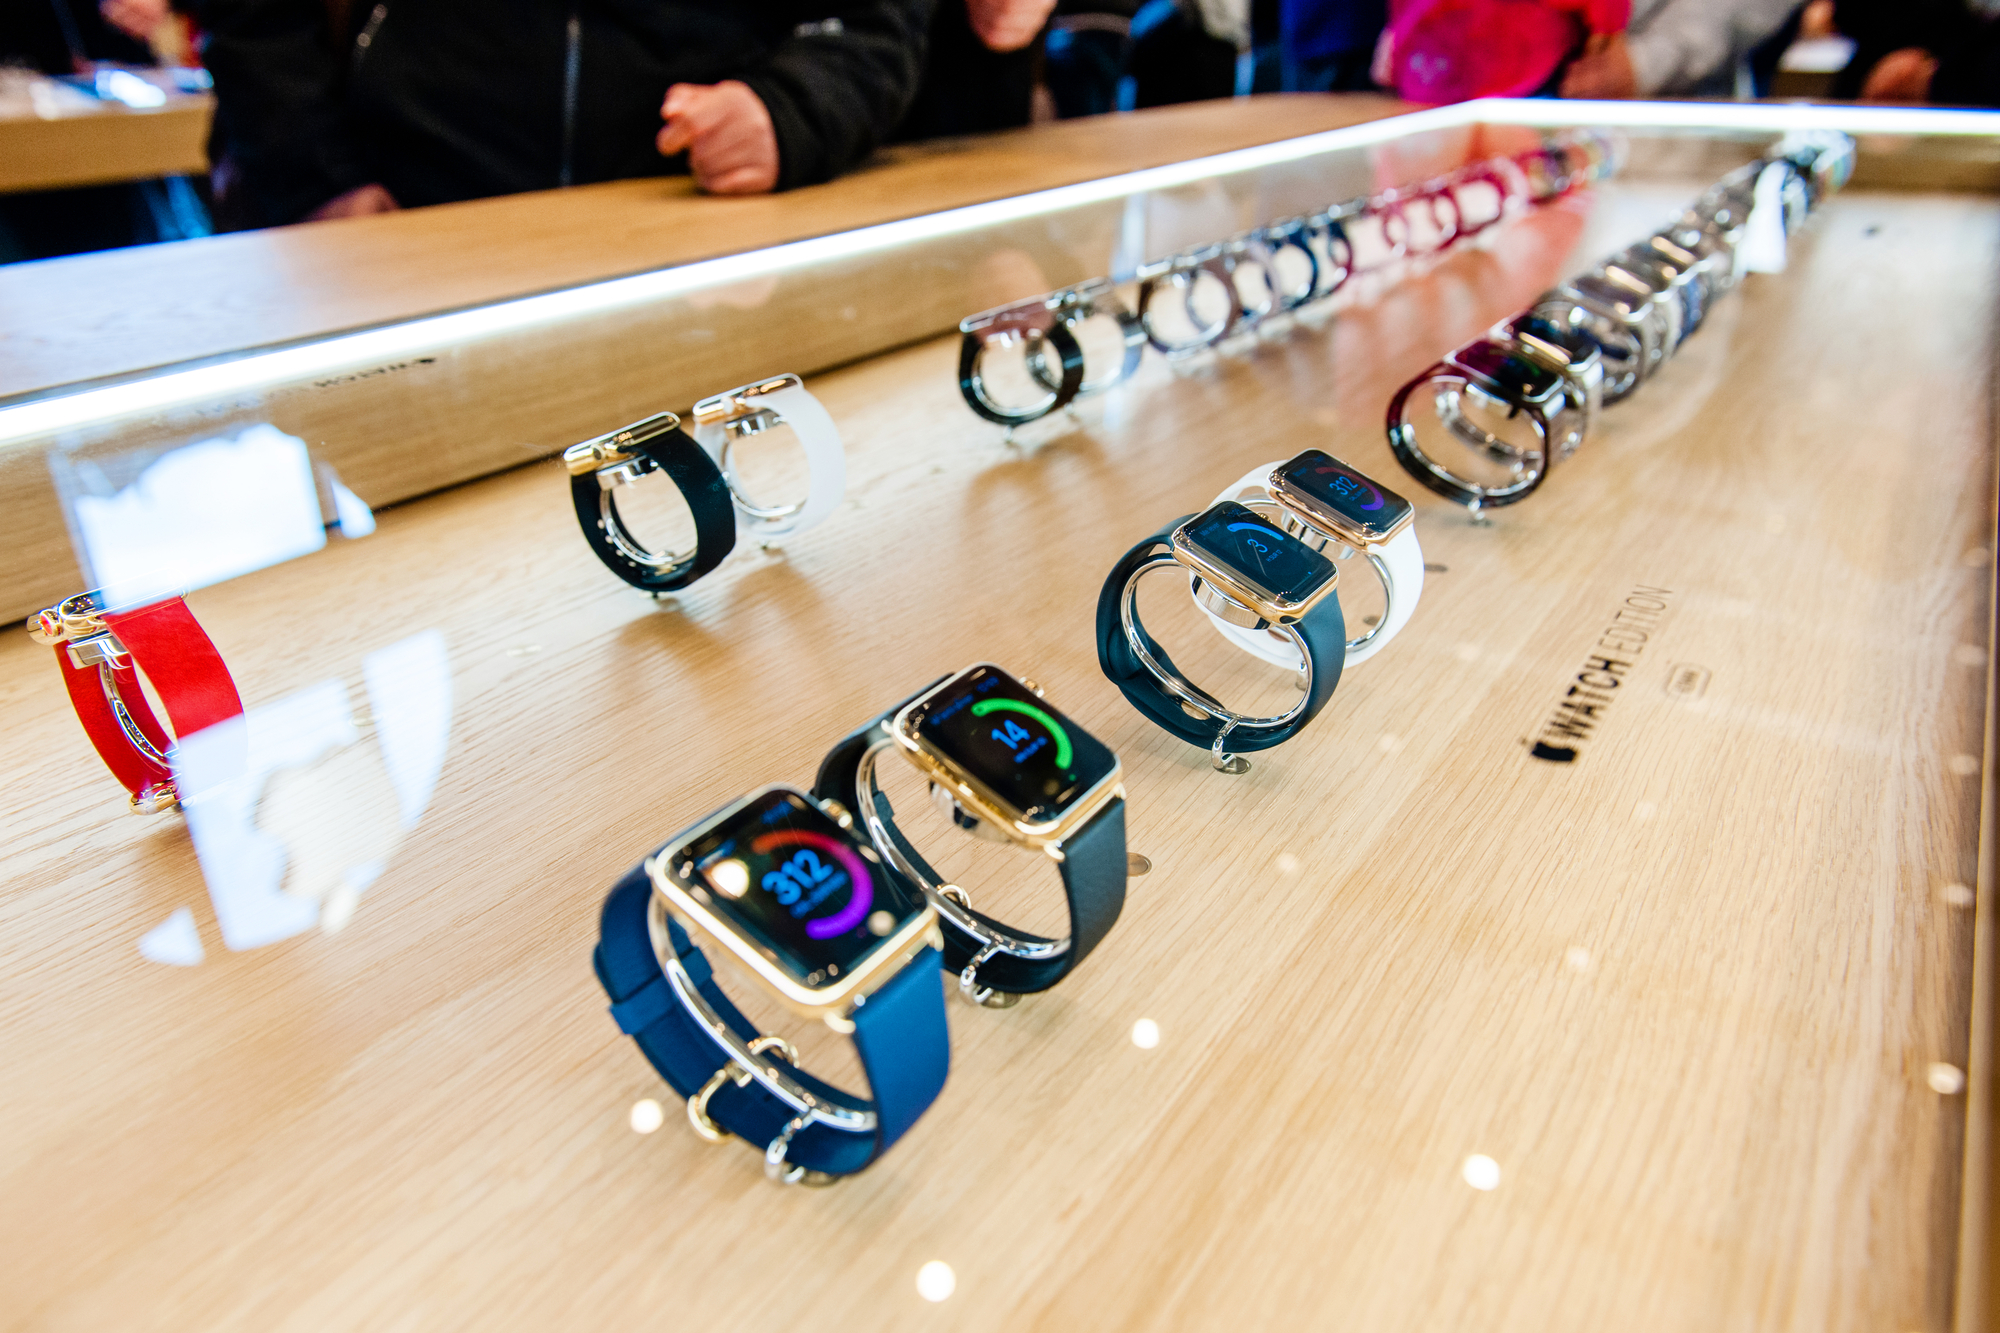 Apple Watch close-up details